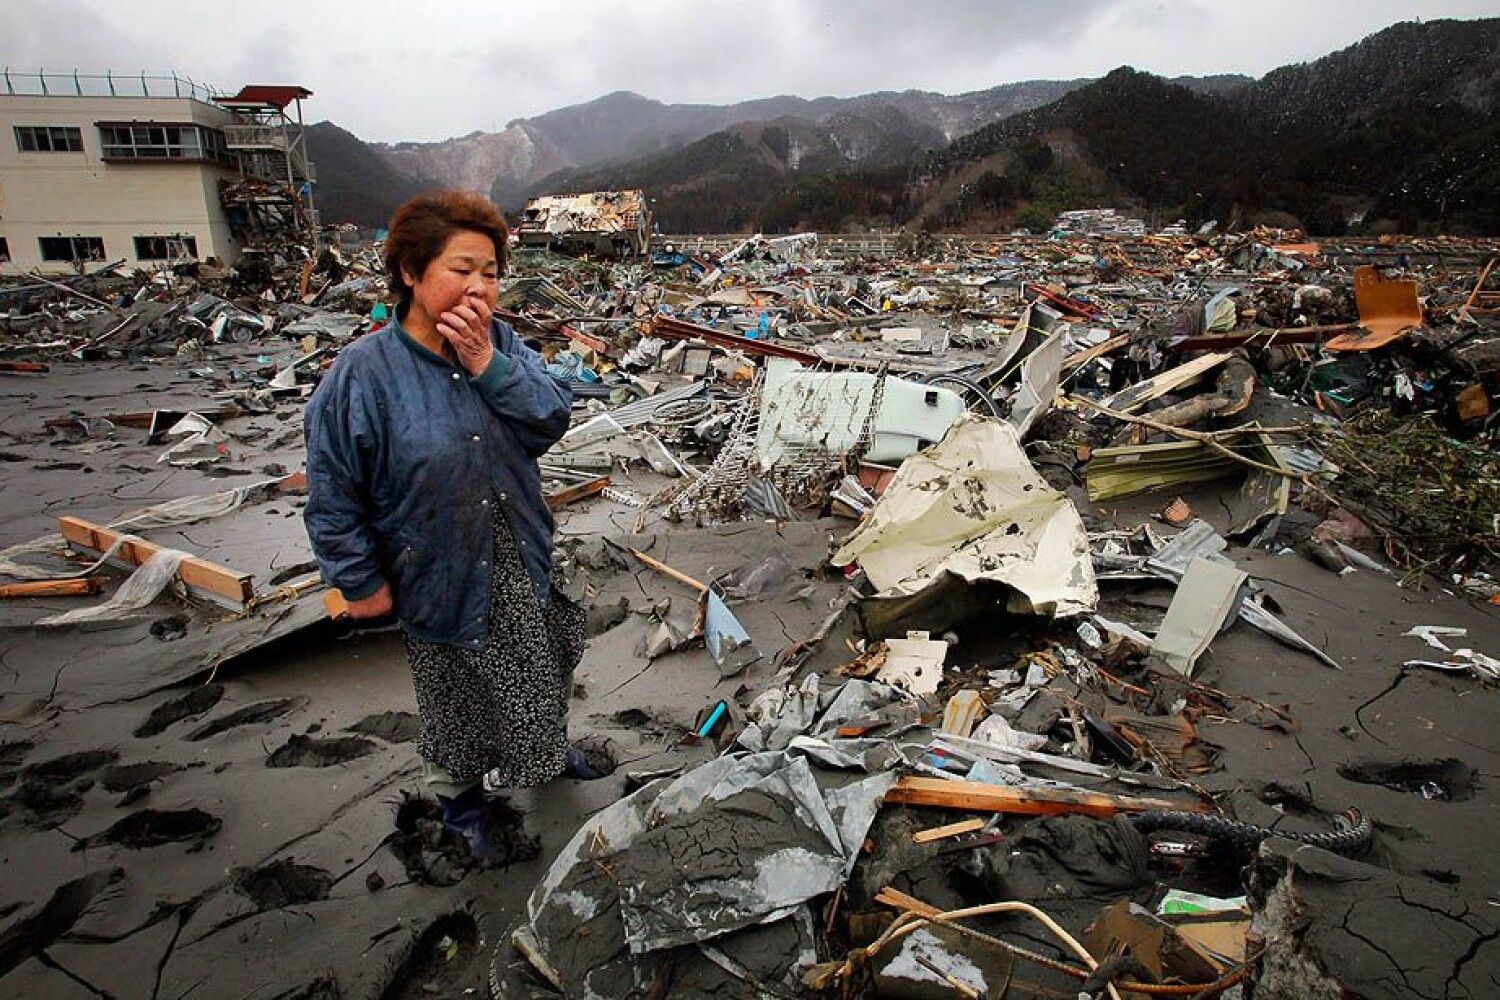 Япония последние новости землетрясение. ЦУНАМИ В Японии в 2011. Япония 2011 землетрясение и ЦУНАМИ. Землетрясение и ЦУНАМИ В Японии в 2011 году.